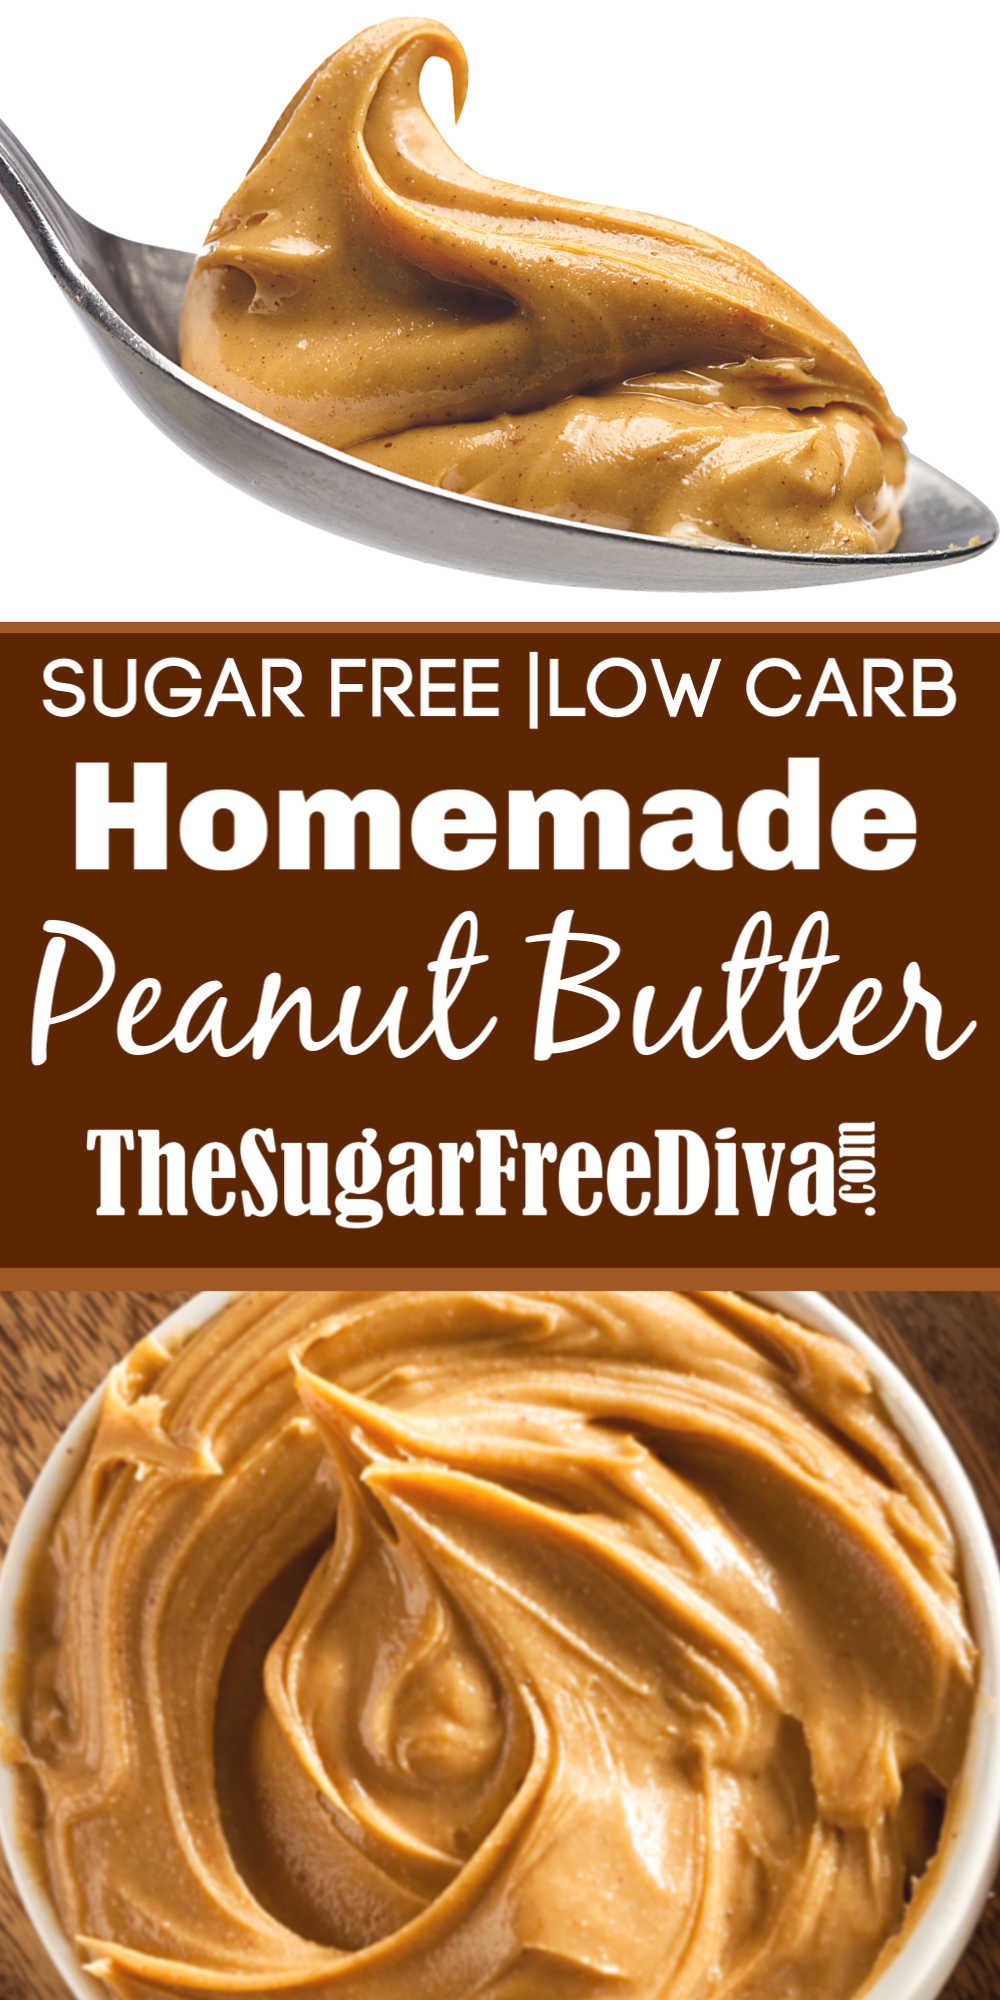 How to Make Homemade Sugar Free Peanut Butter